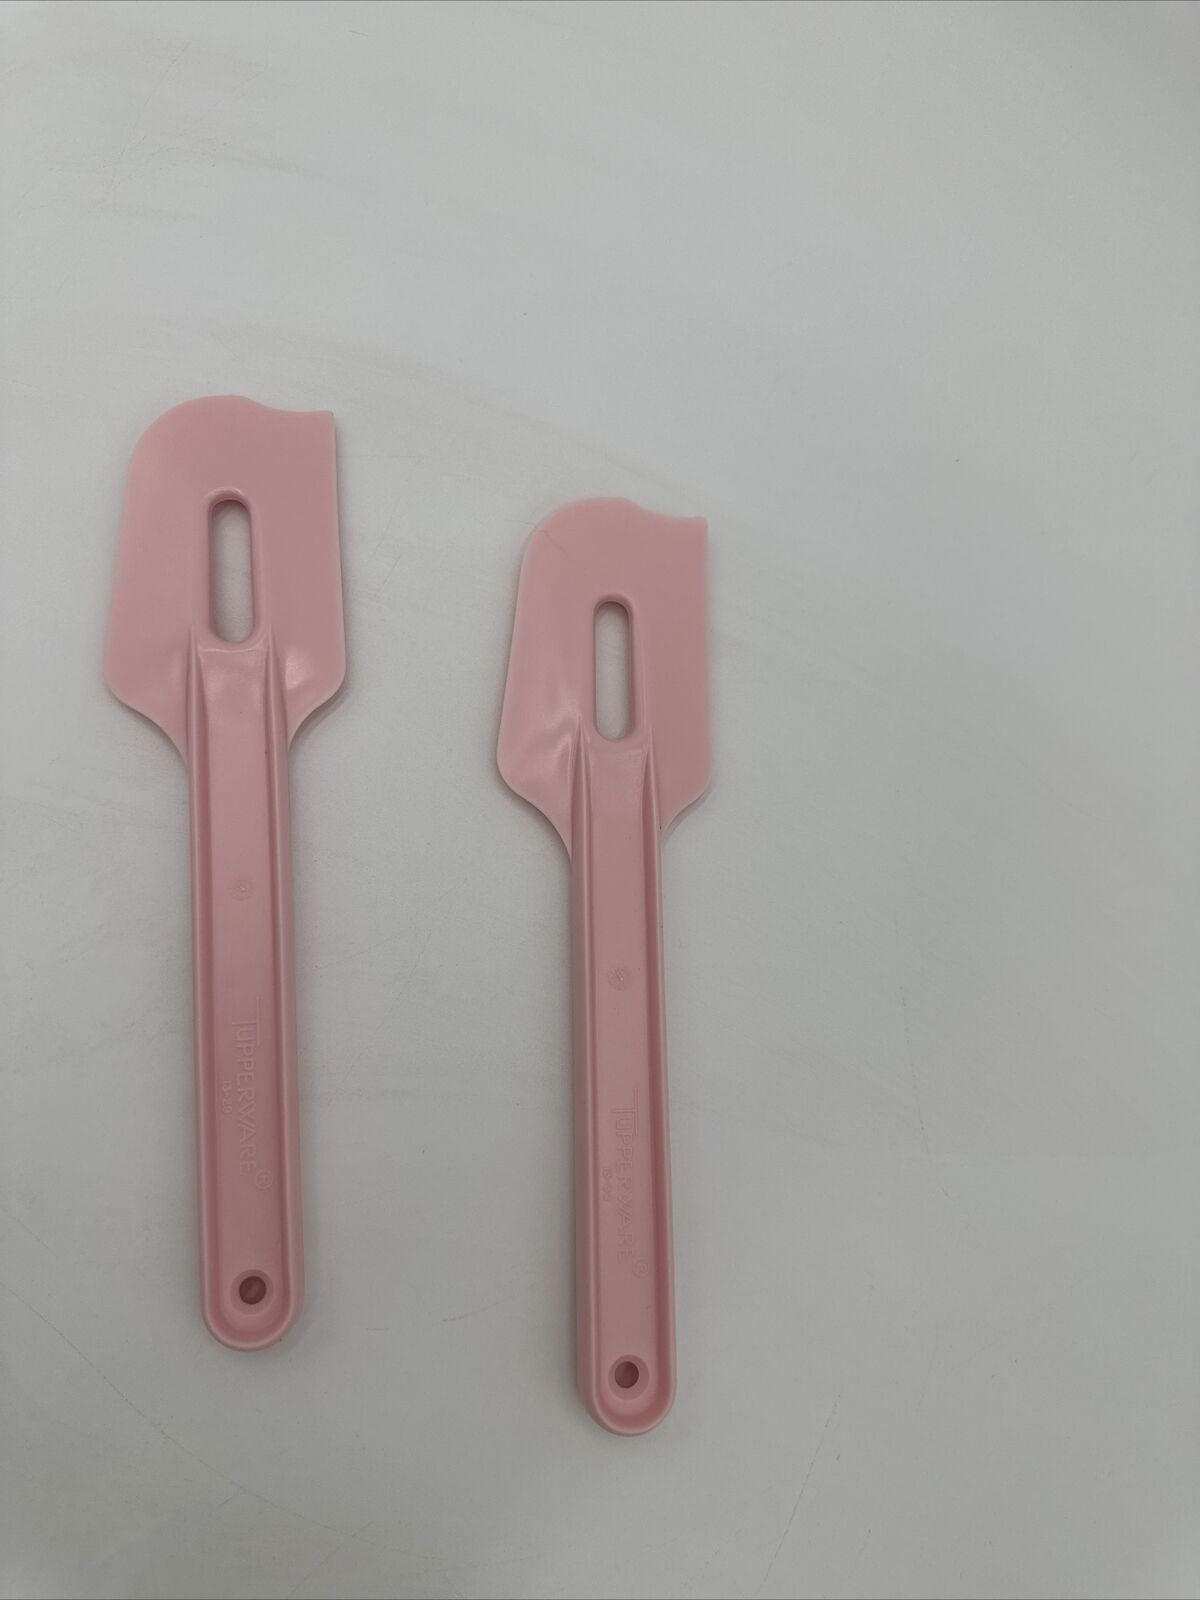 Tupperware Paddle Scraper Gadget Spatula Vintage Style Pink Set of 2 New Pink